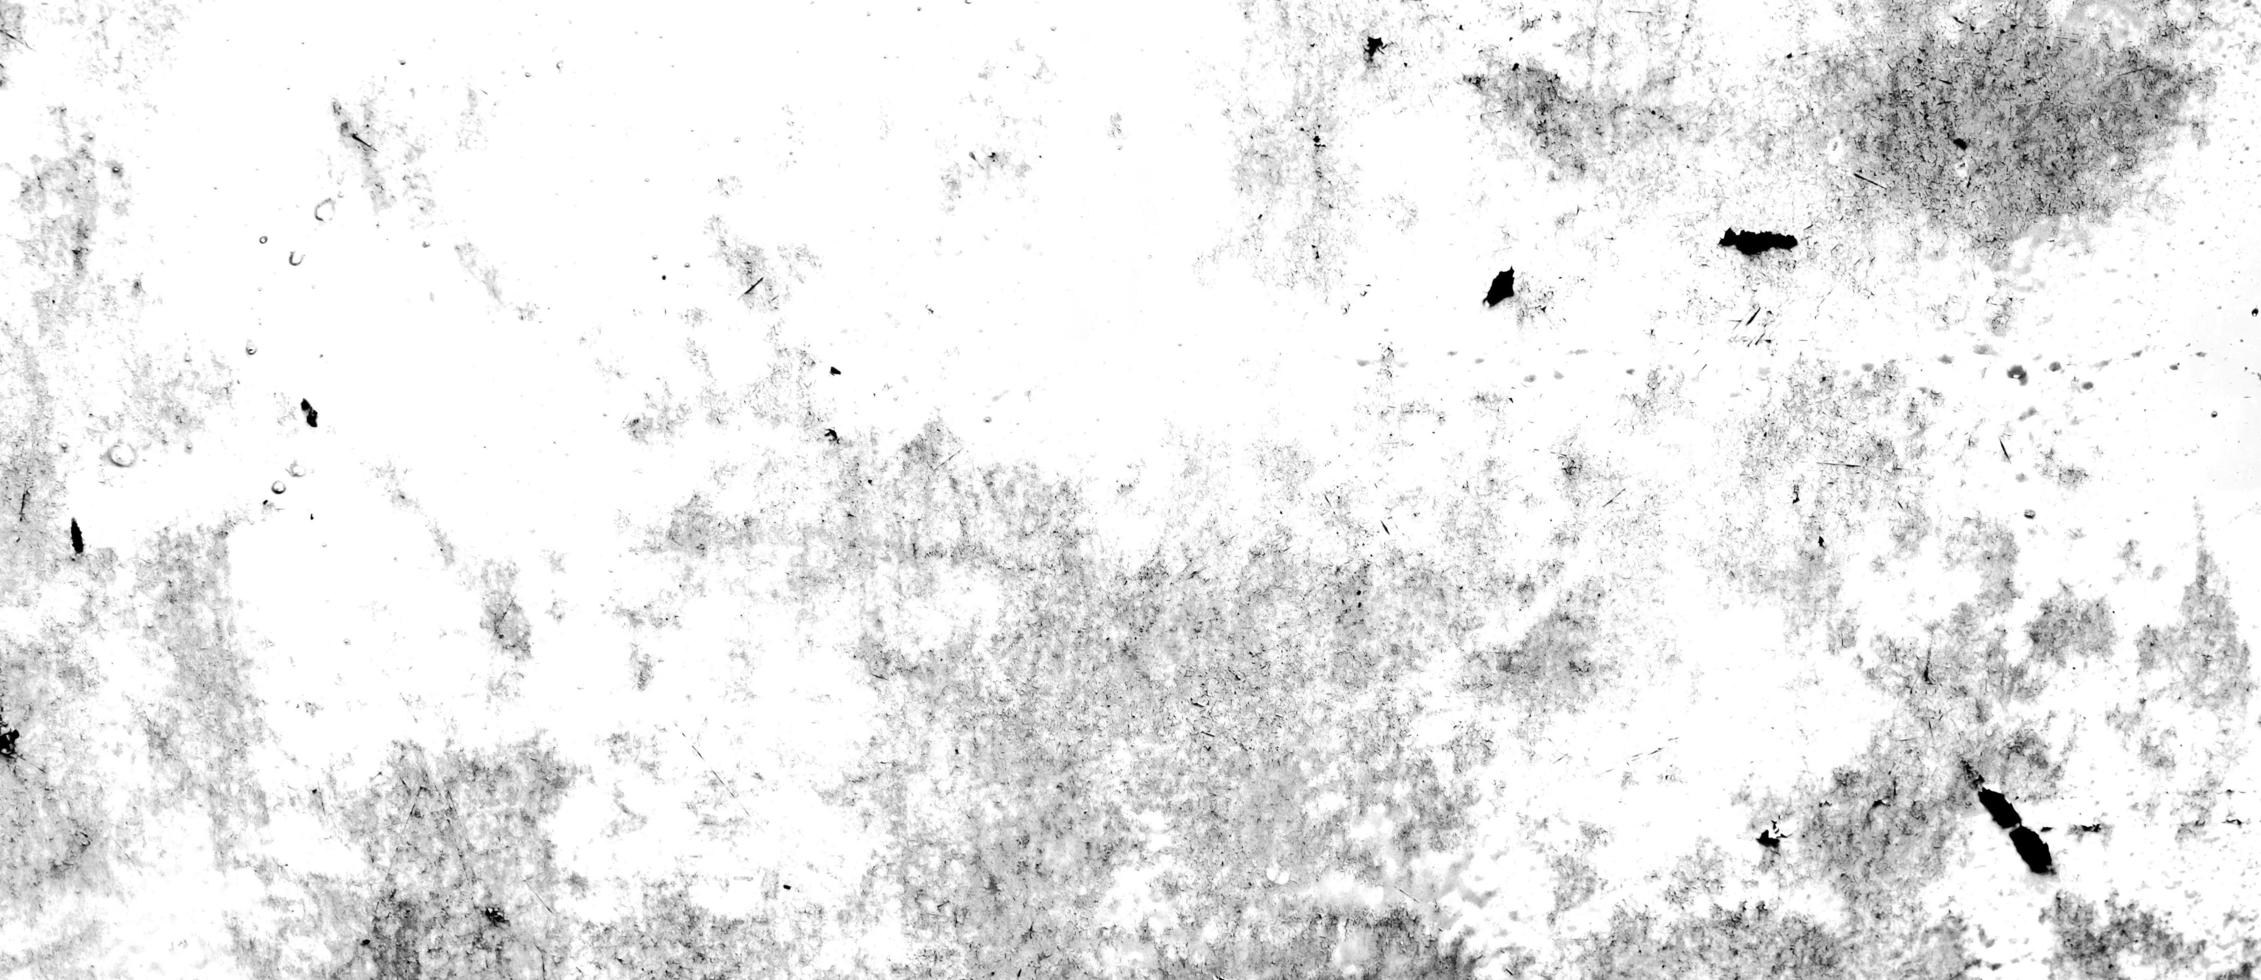 grunge metaal en stof krassen zwart en wit structuur achtergrond panorama foto